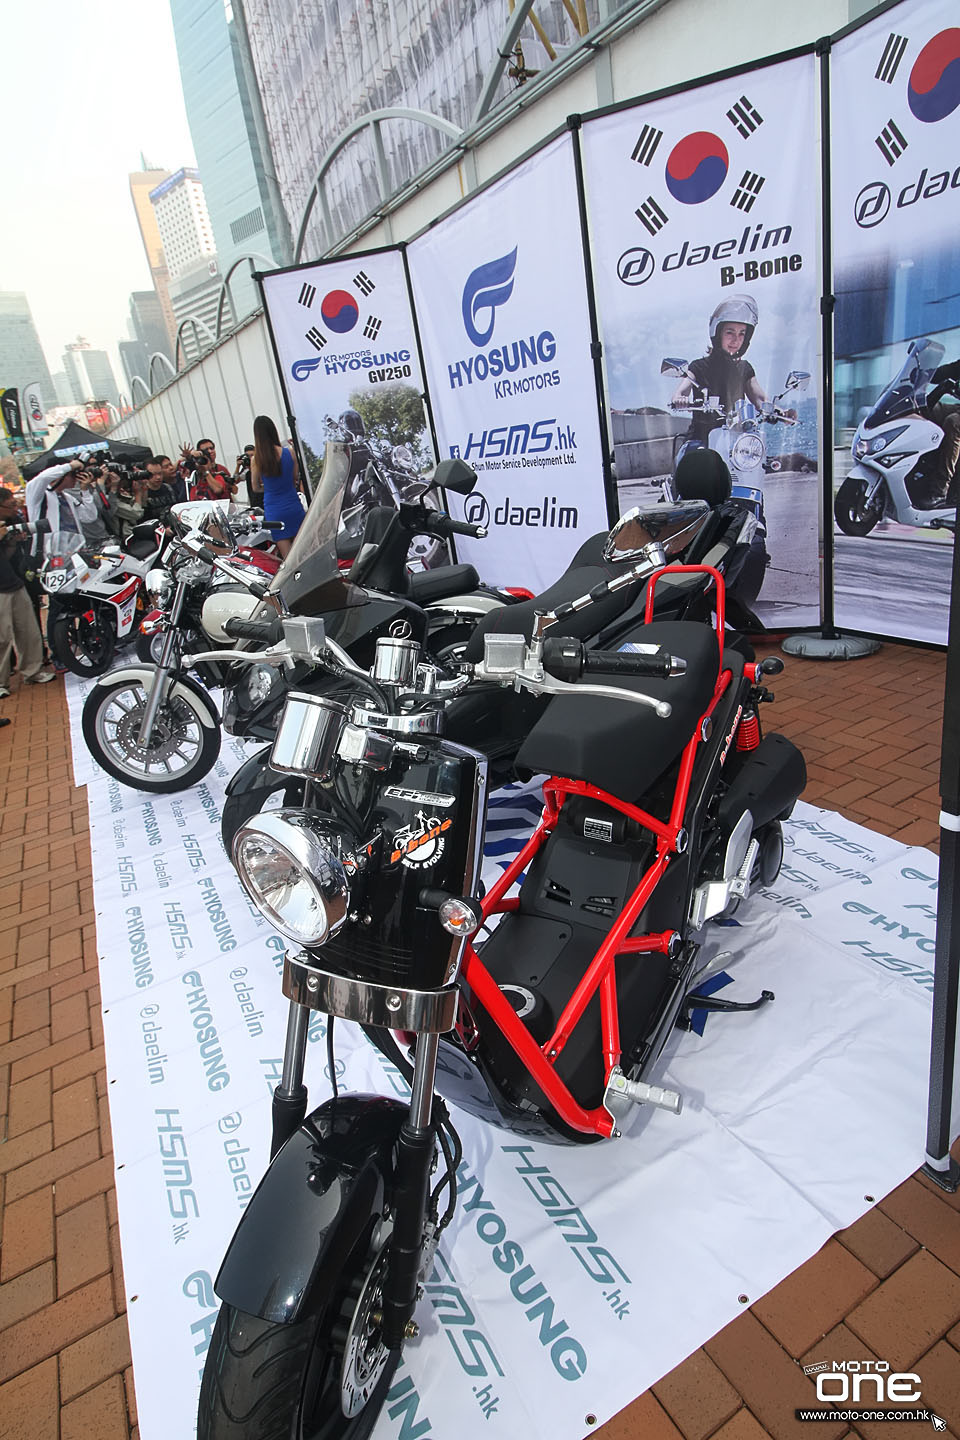 2015 hyosung daelim hk bikeshow